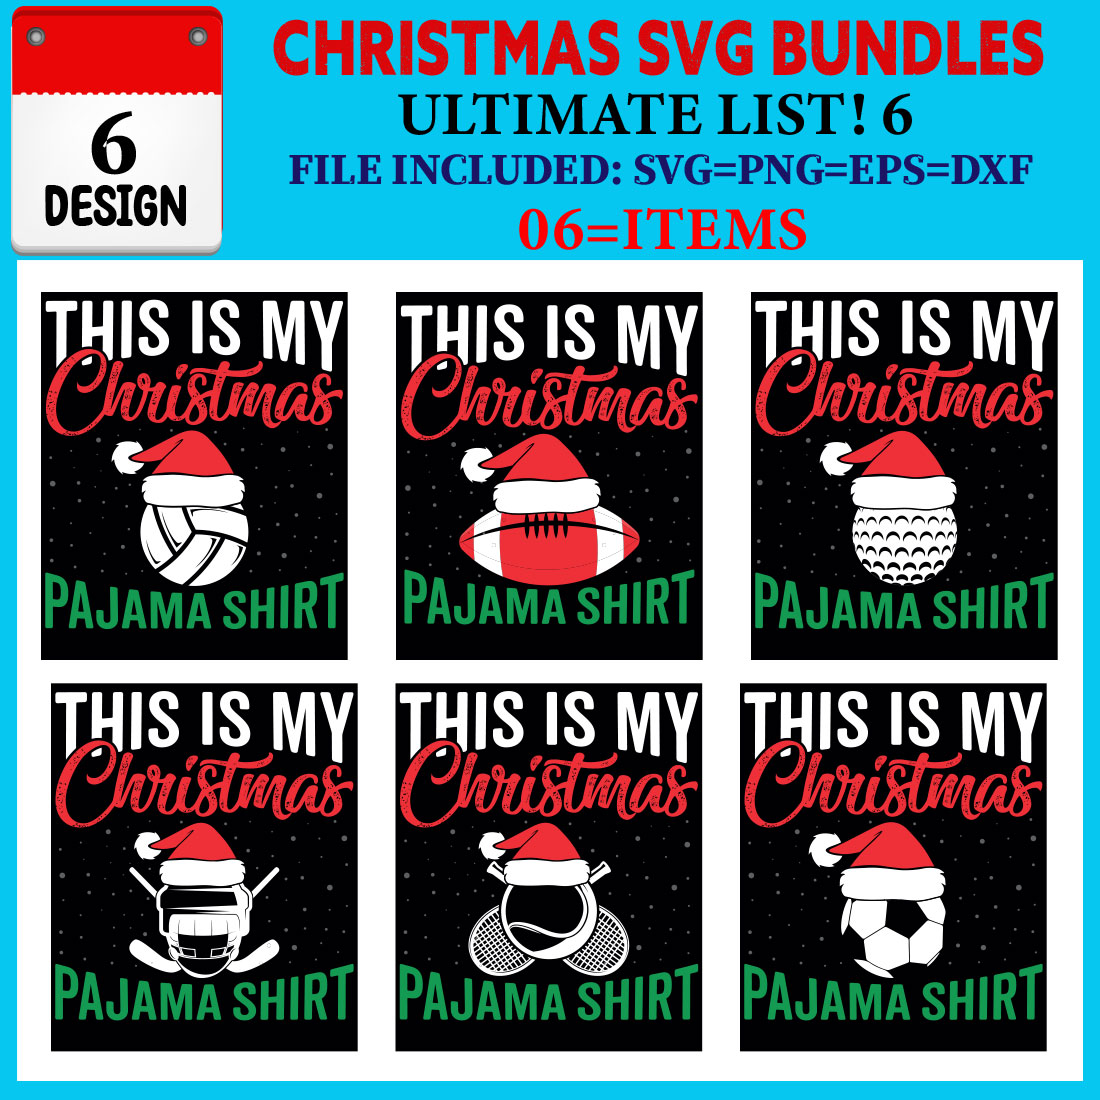 Christmas T-shirt Design Bundle Vol-42 cover image.